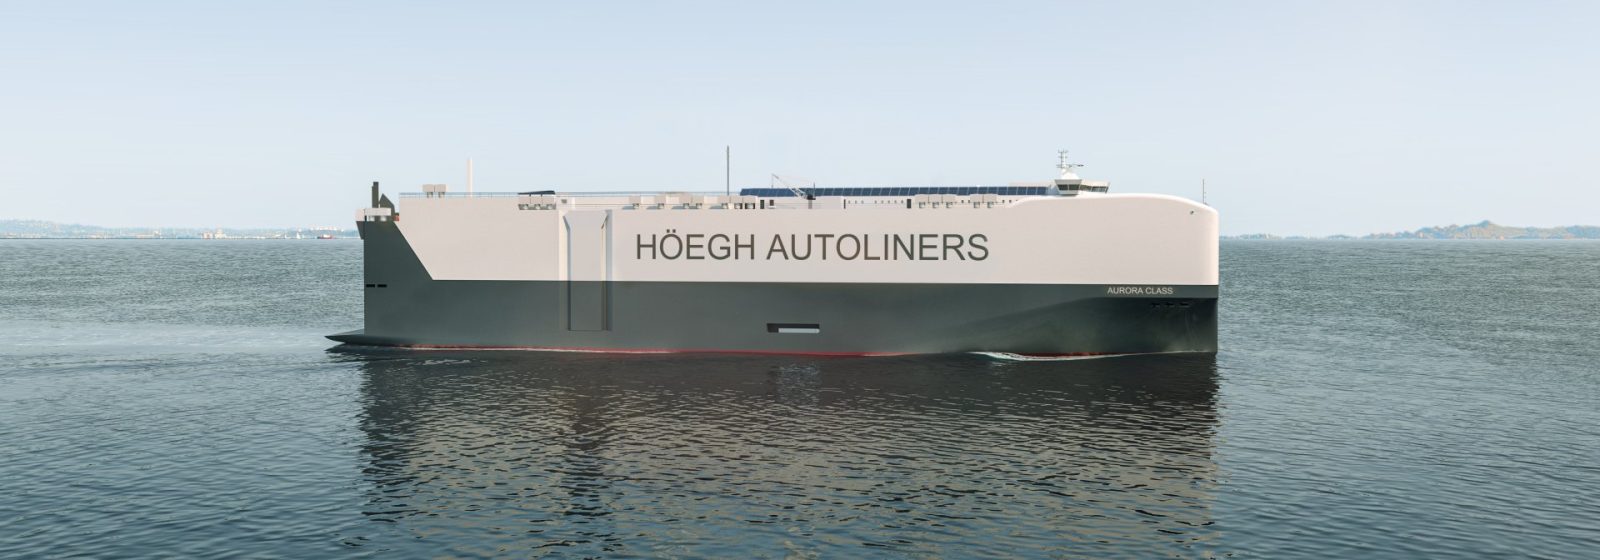 20220121 Höegh Autonliners Aurora class